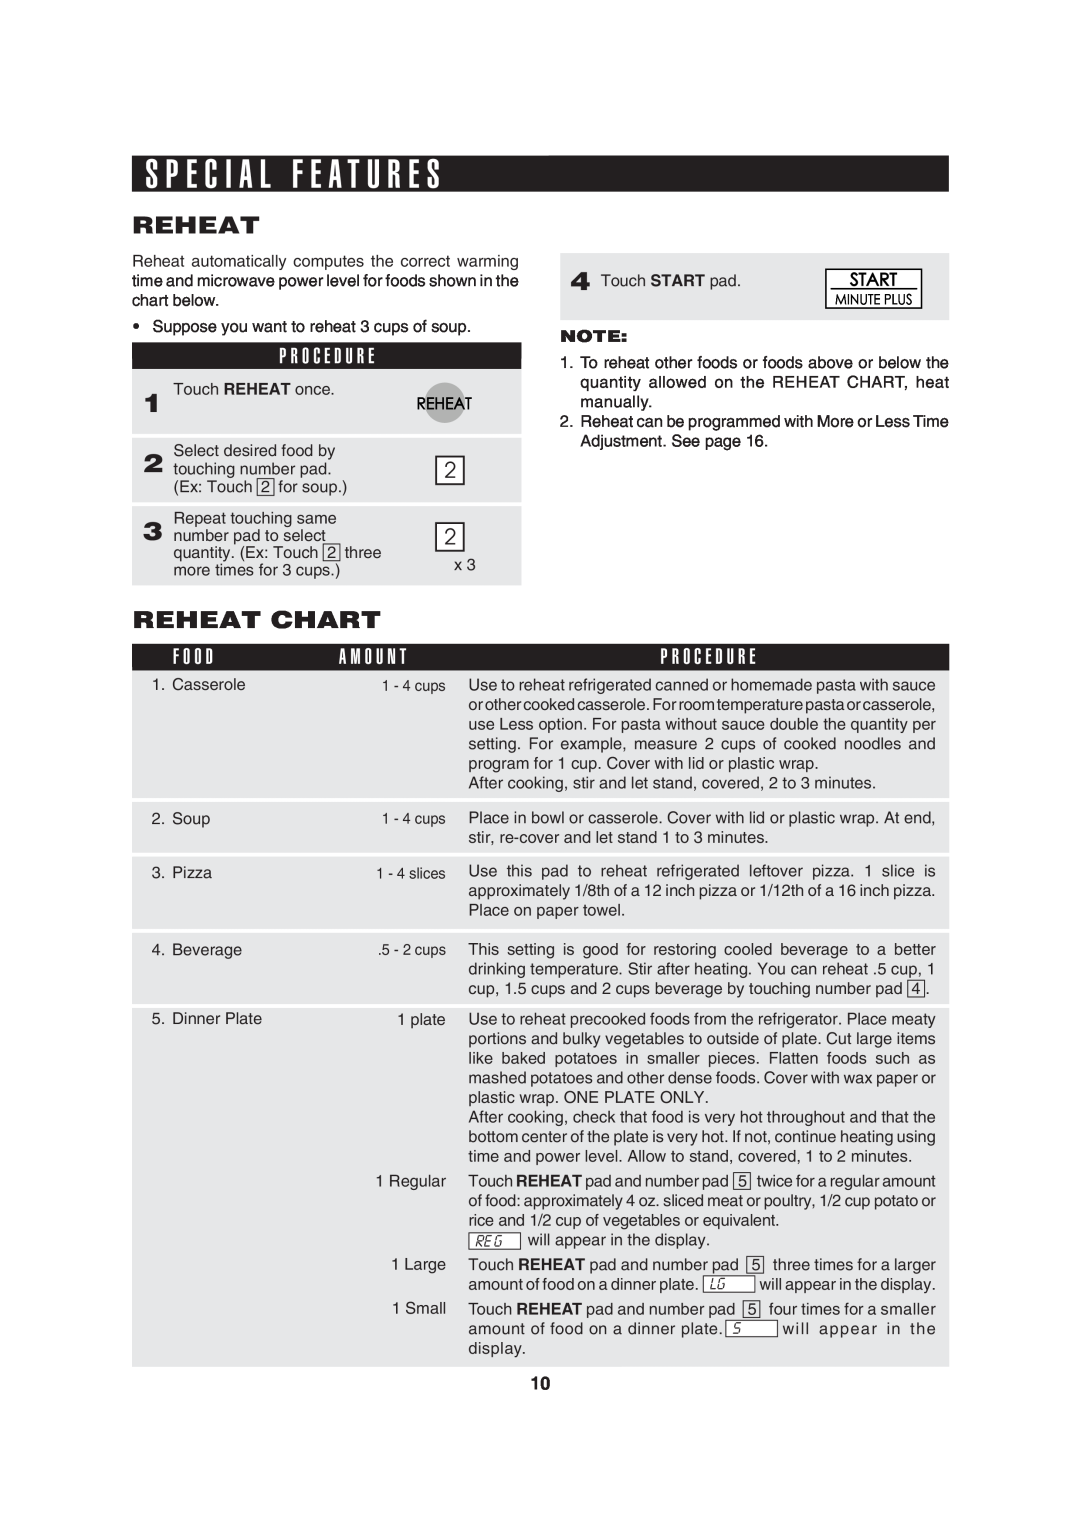 Sharp R-310H operation manual S P E C I A L F E A T U R E S, Reheat Chart 